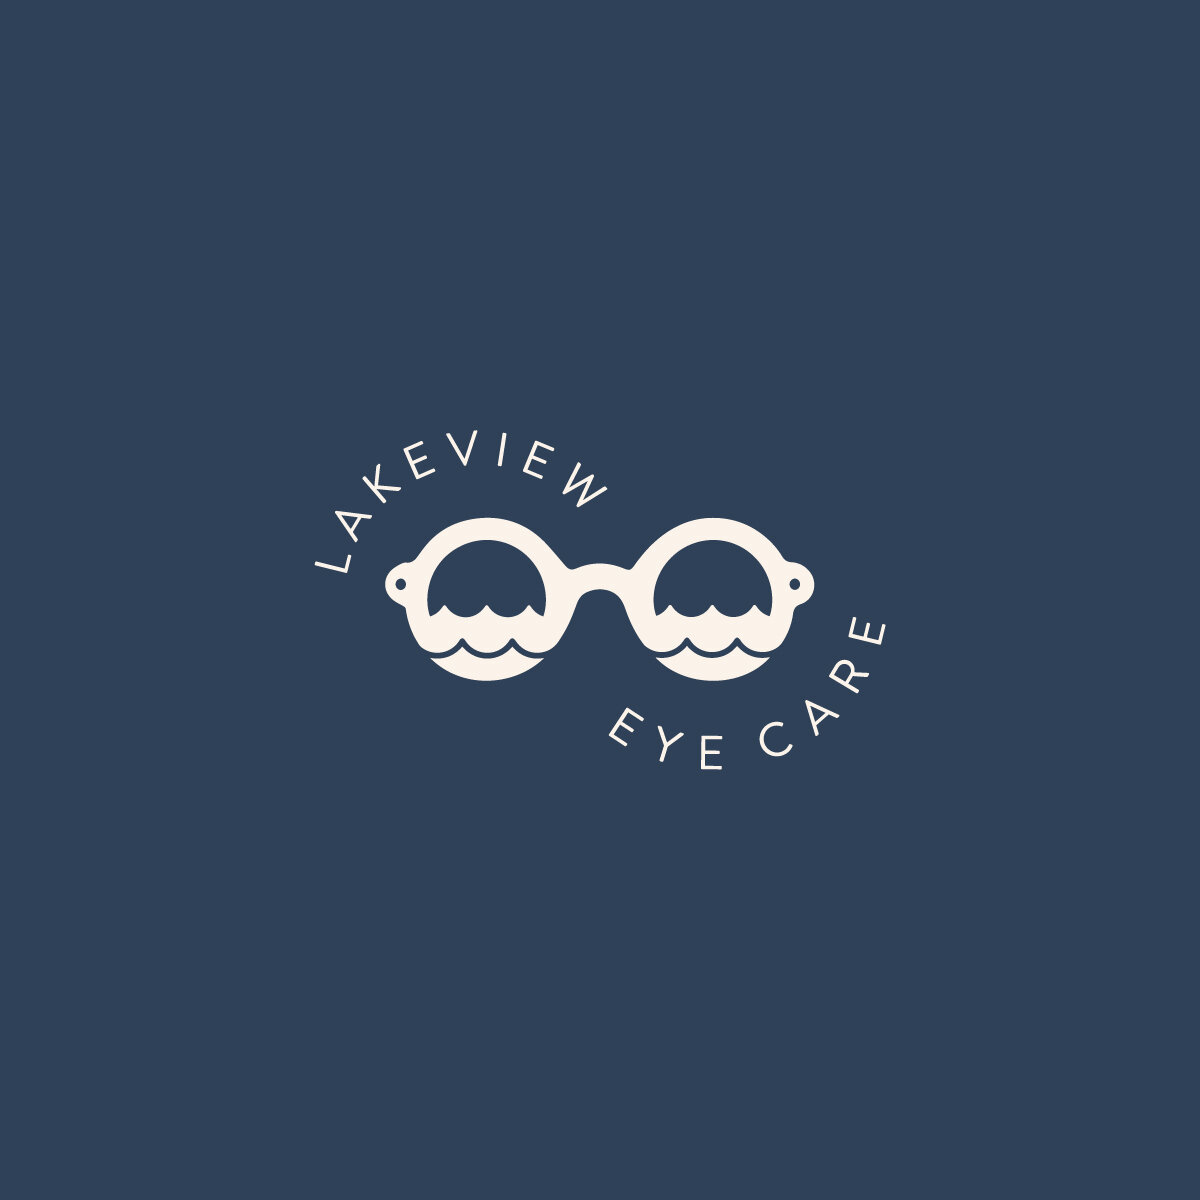 Lakeview Eye Care Branding